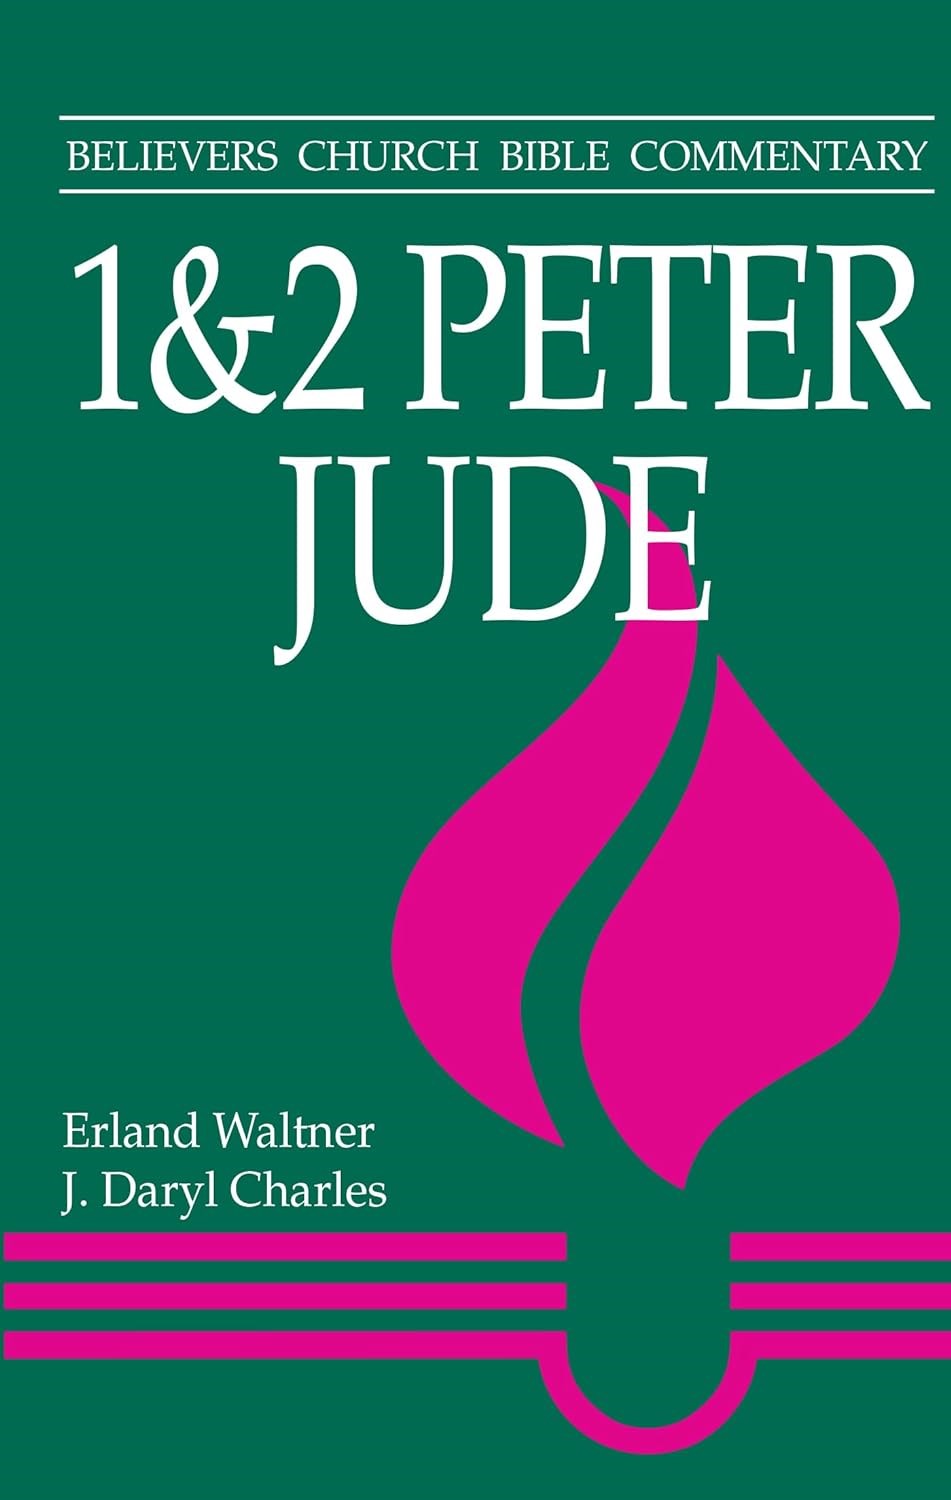 1 & Peter  Jude